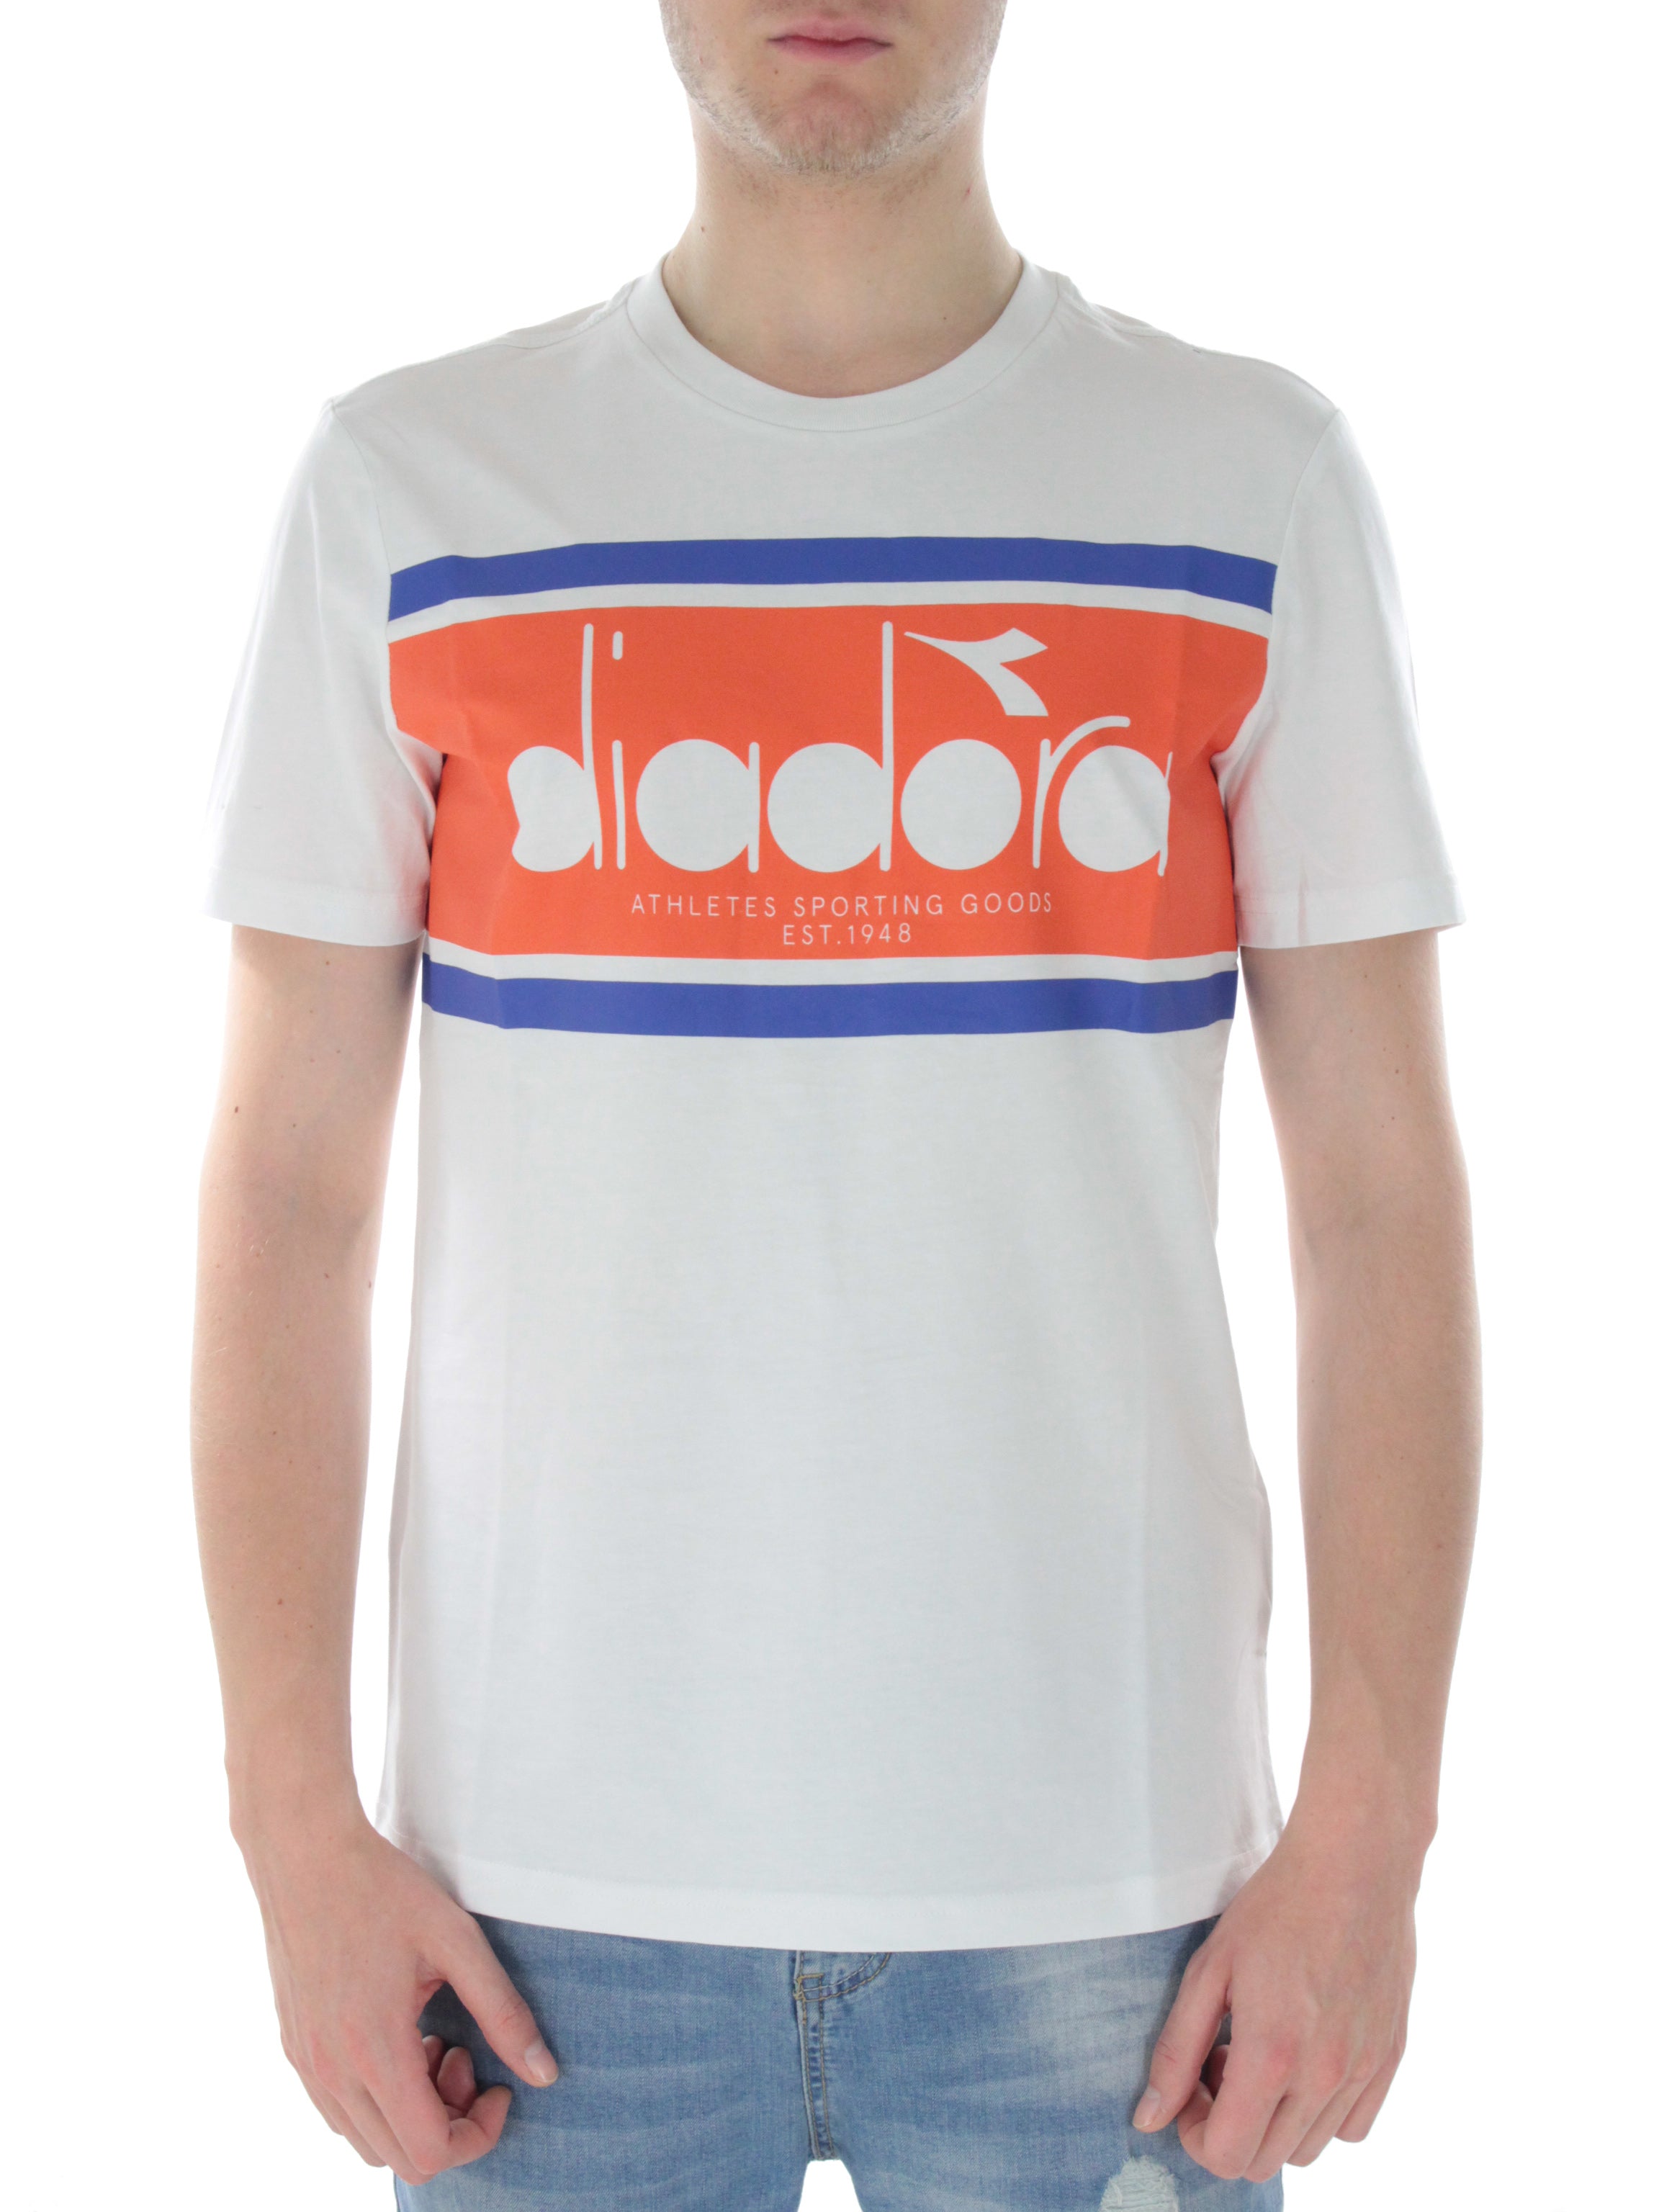 Diadora T-Shirt Spectra